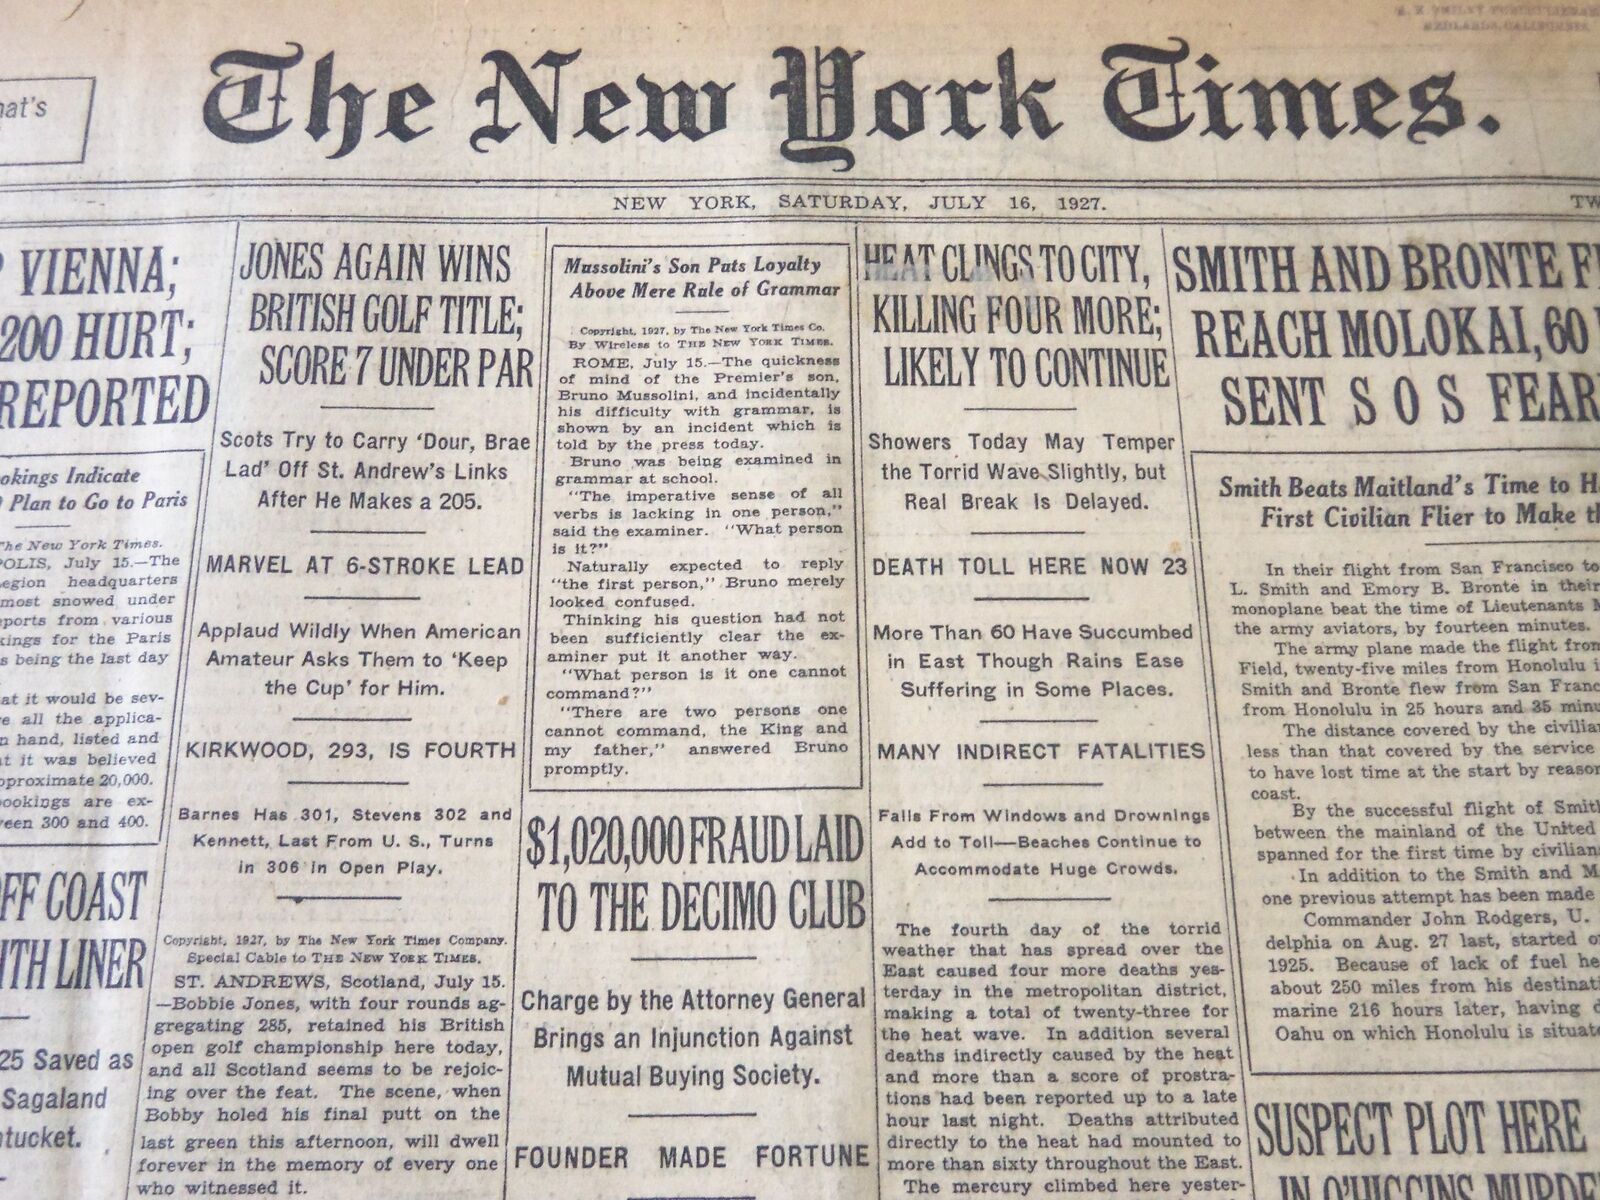 1927 JULY 16 NEW YORK TIMES - JONES AGAIN WINS BRITISH GOLF TITLE - NT 6357